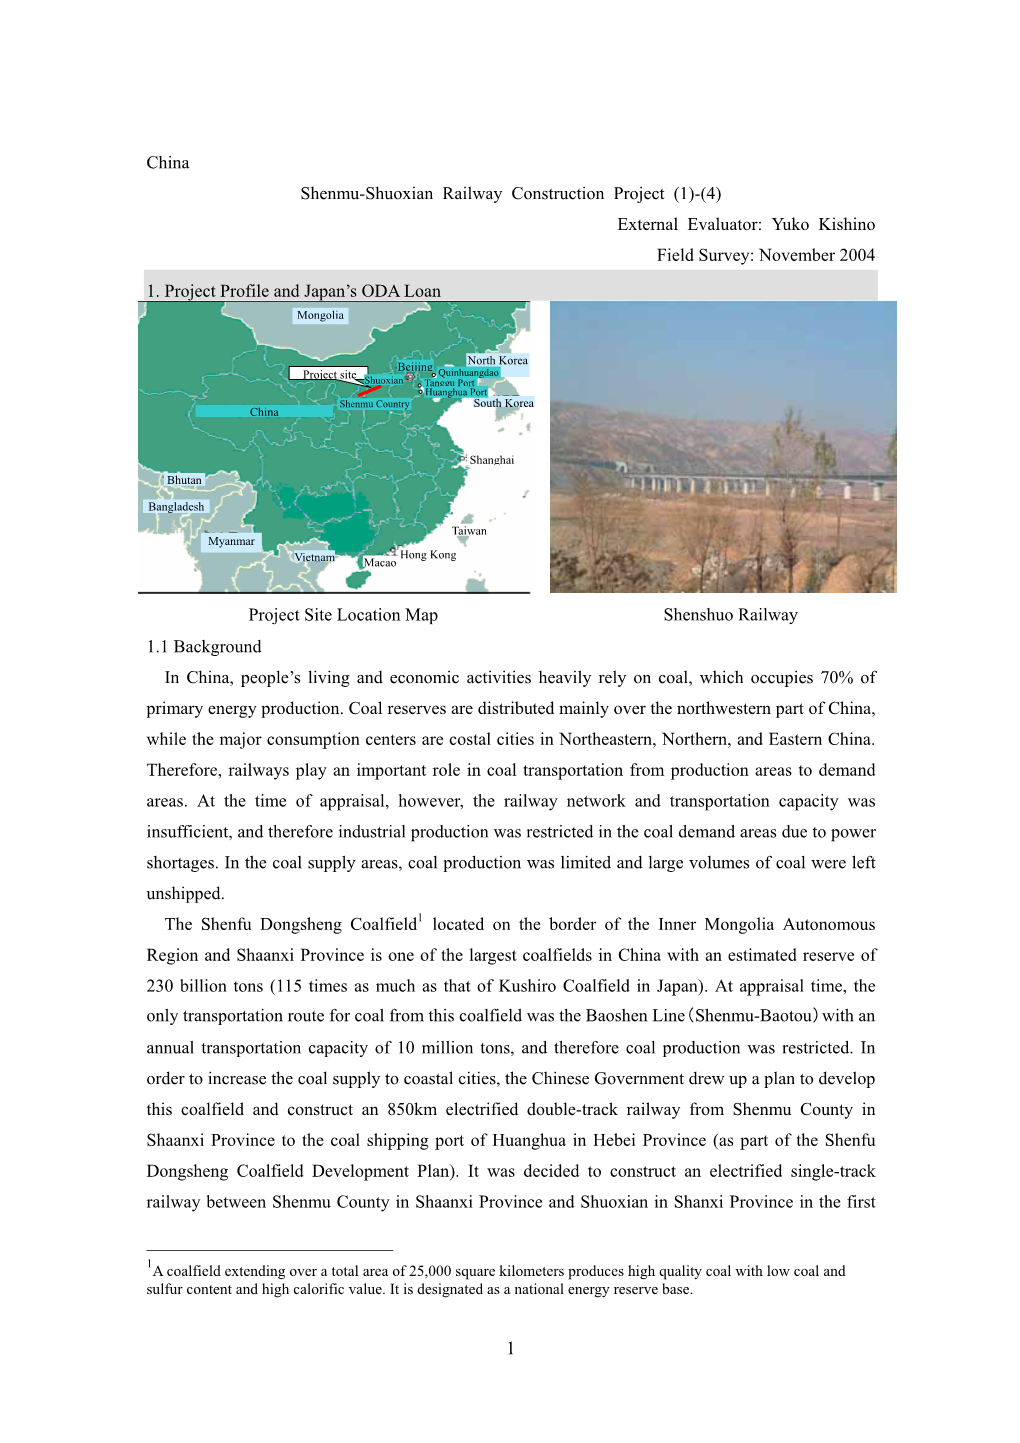 China Shenmu-Shuoxian Railway Construction Project (1)-(4) External Evaluator: Yuko Kishino Field Survey: November 2004 1